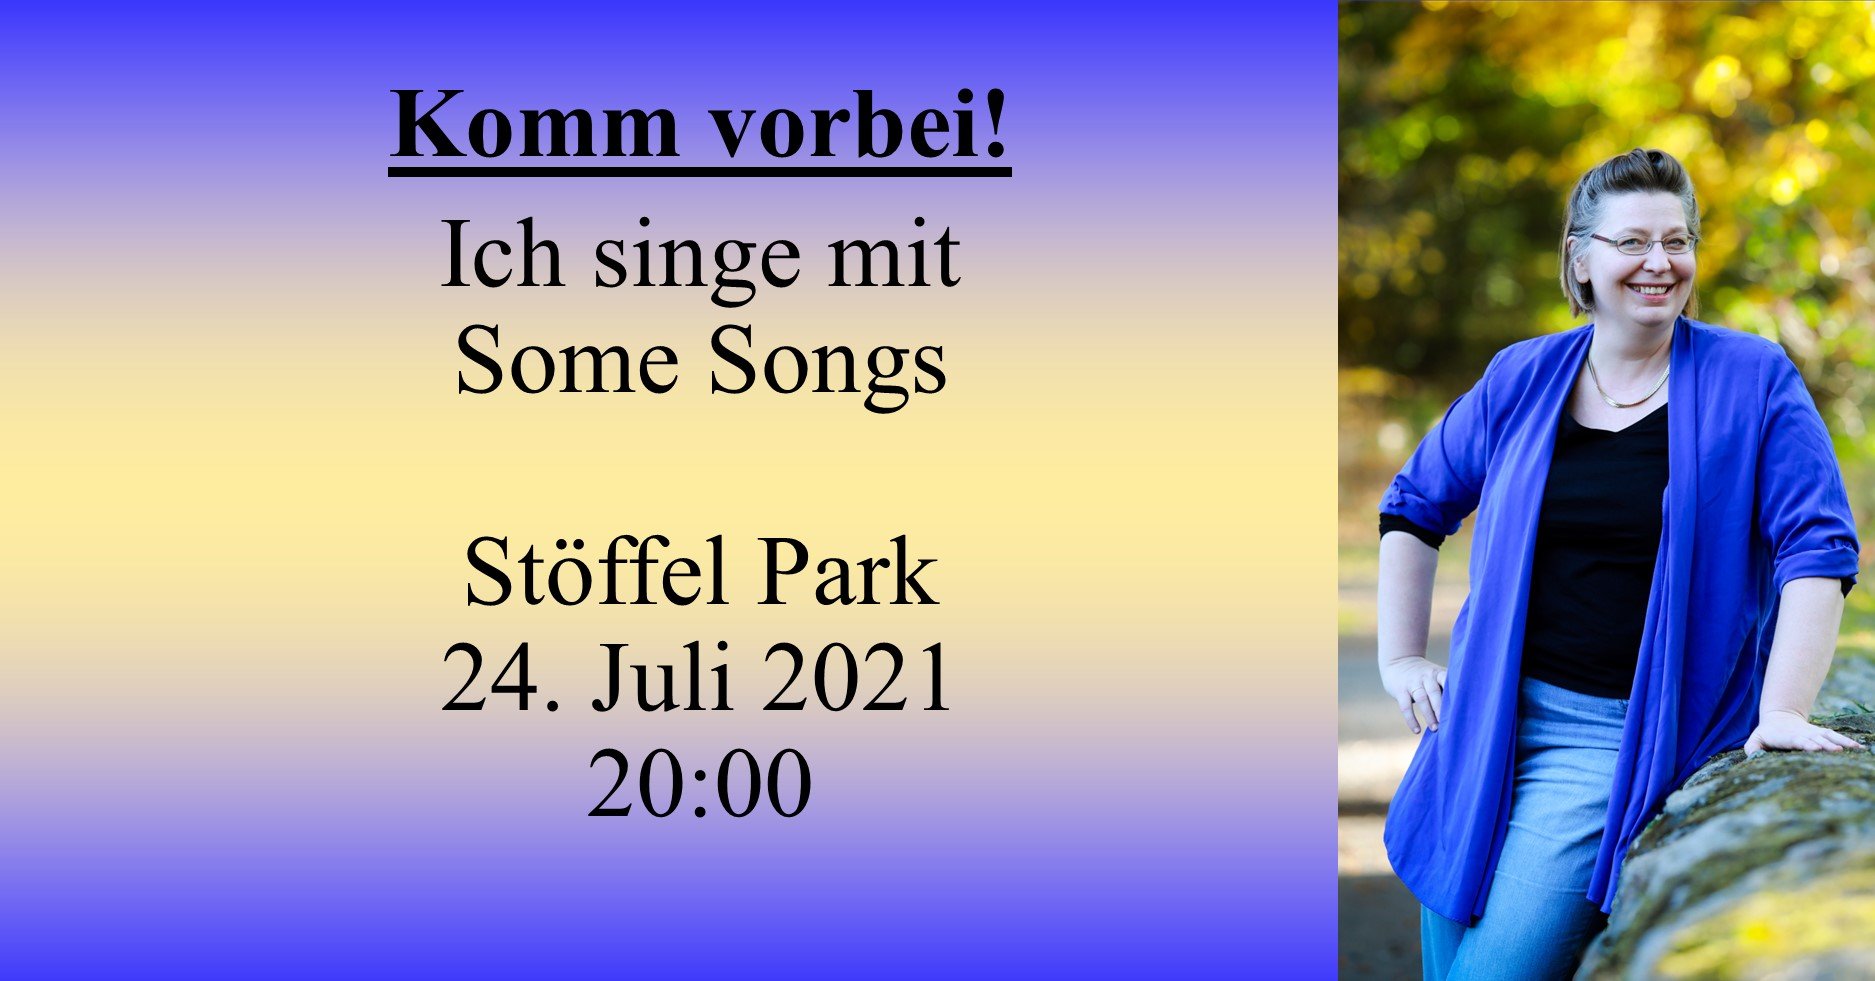 Some Songs in Stöffel Park 24. Juli 2021